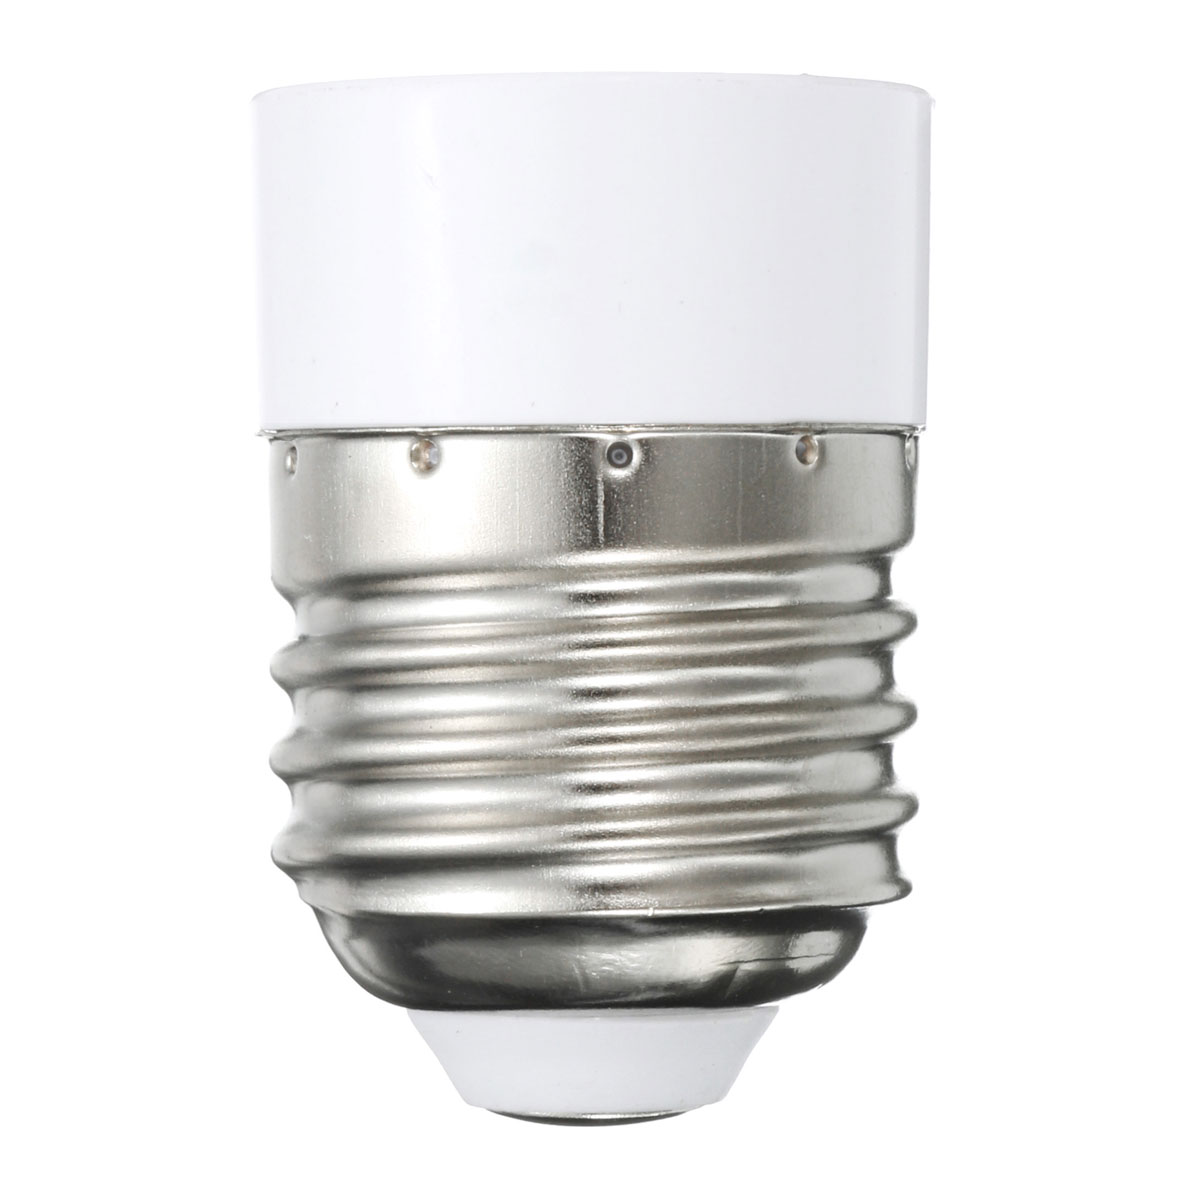 E27-to-E14-Base-LED-Light-Lamp-Bulb-Adapter-Adaptor-Converter-Screw-Socket-Fit-1645726